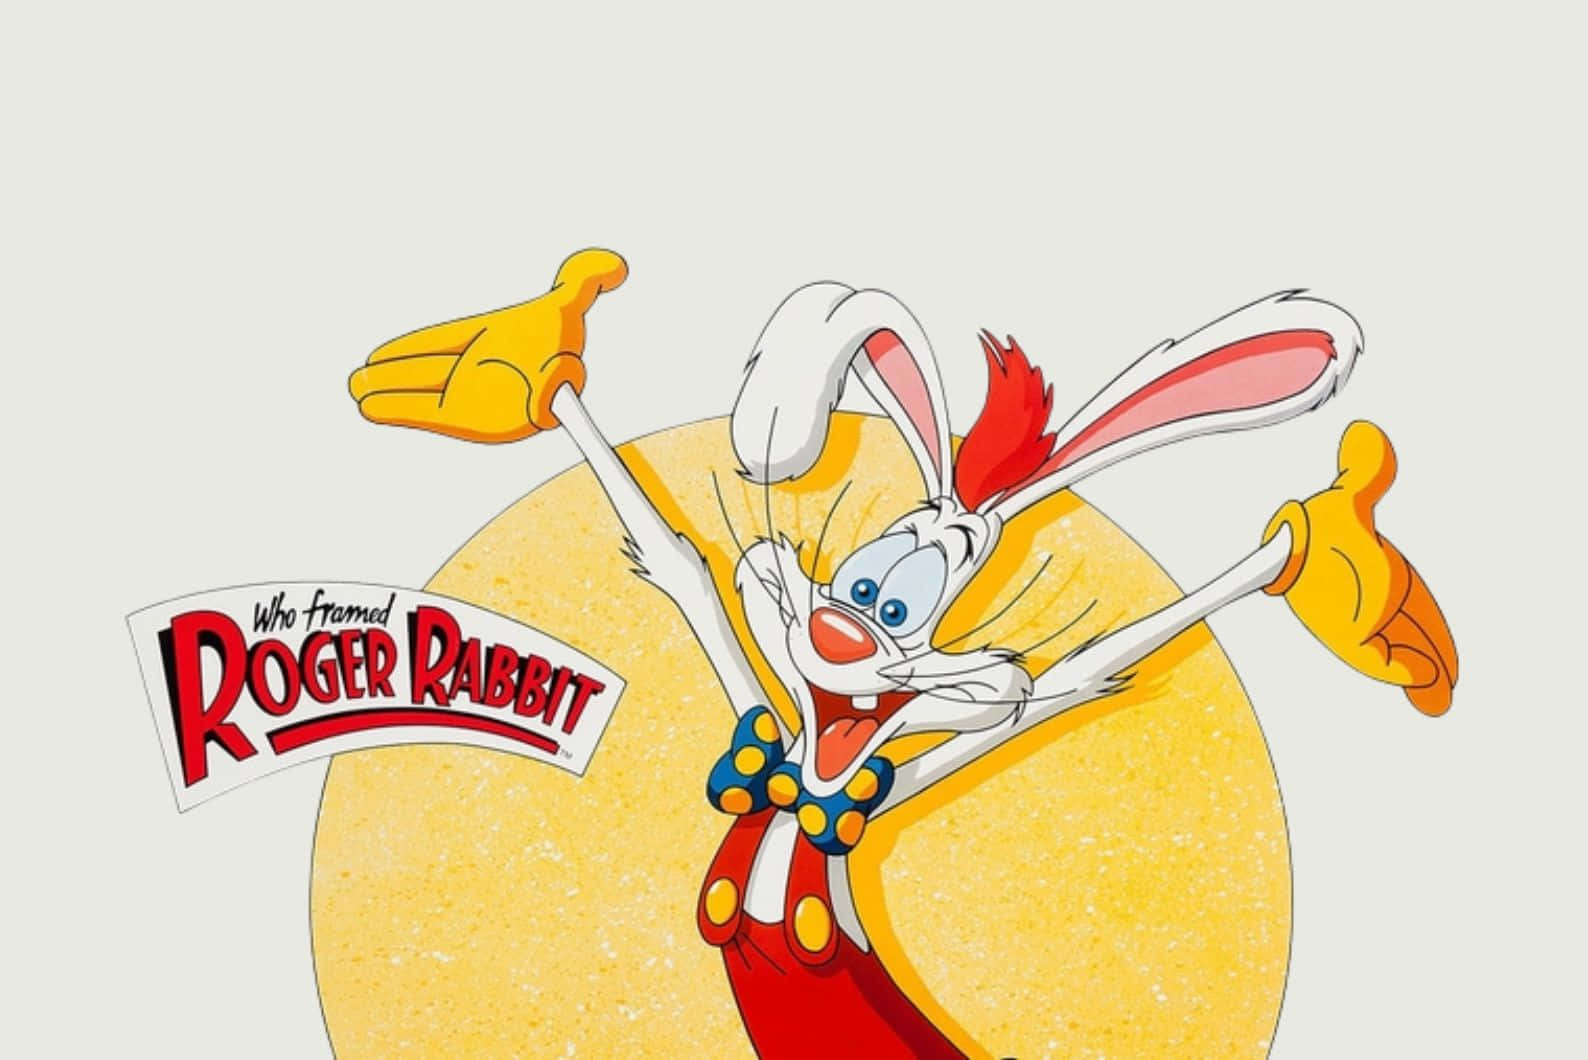 Roger Rabbit Cartoon Character Pose